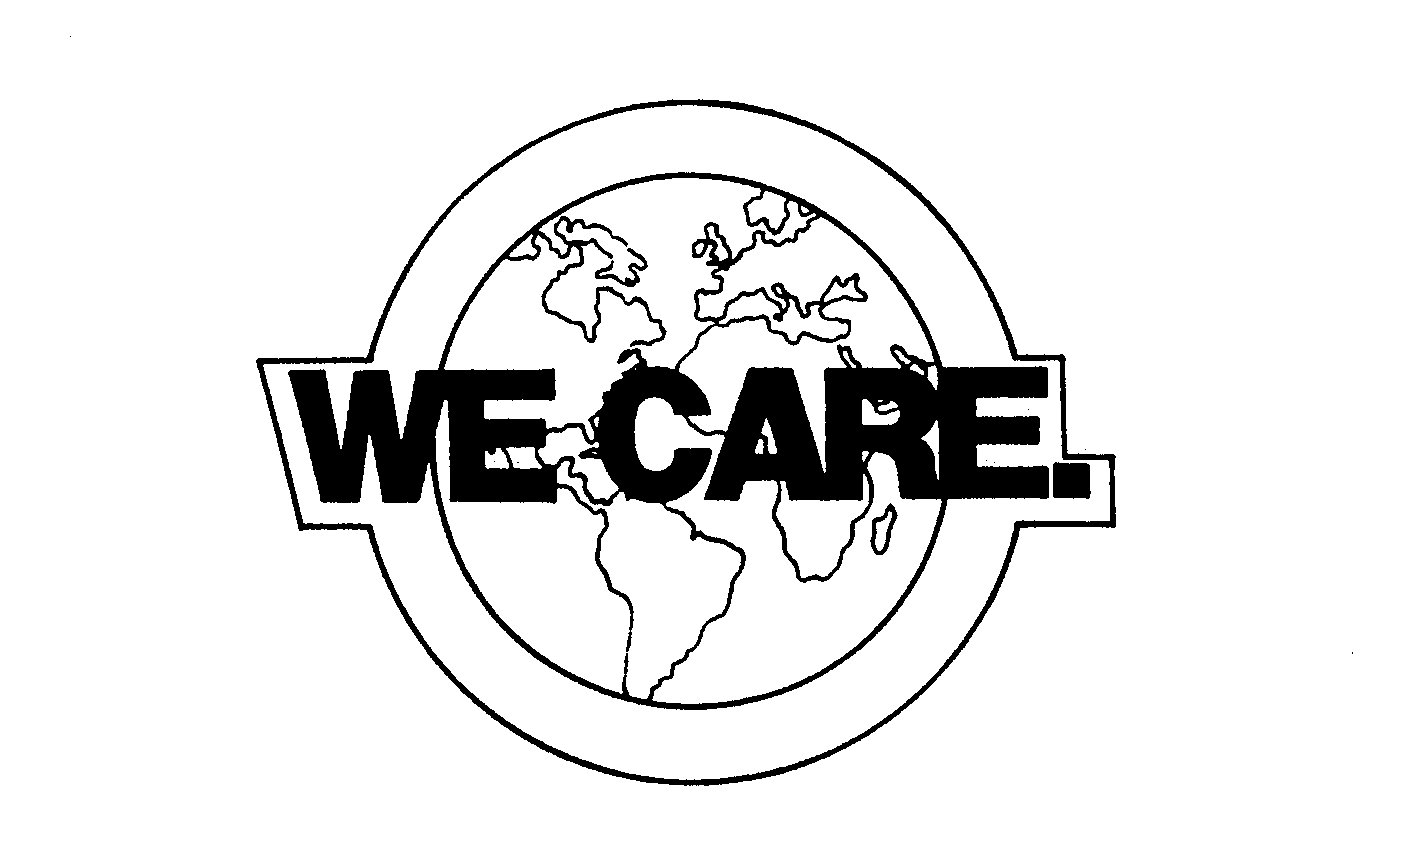  WE CARE.